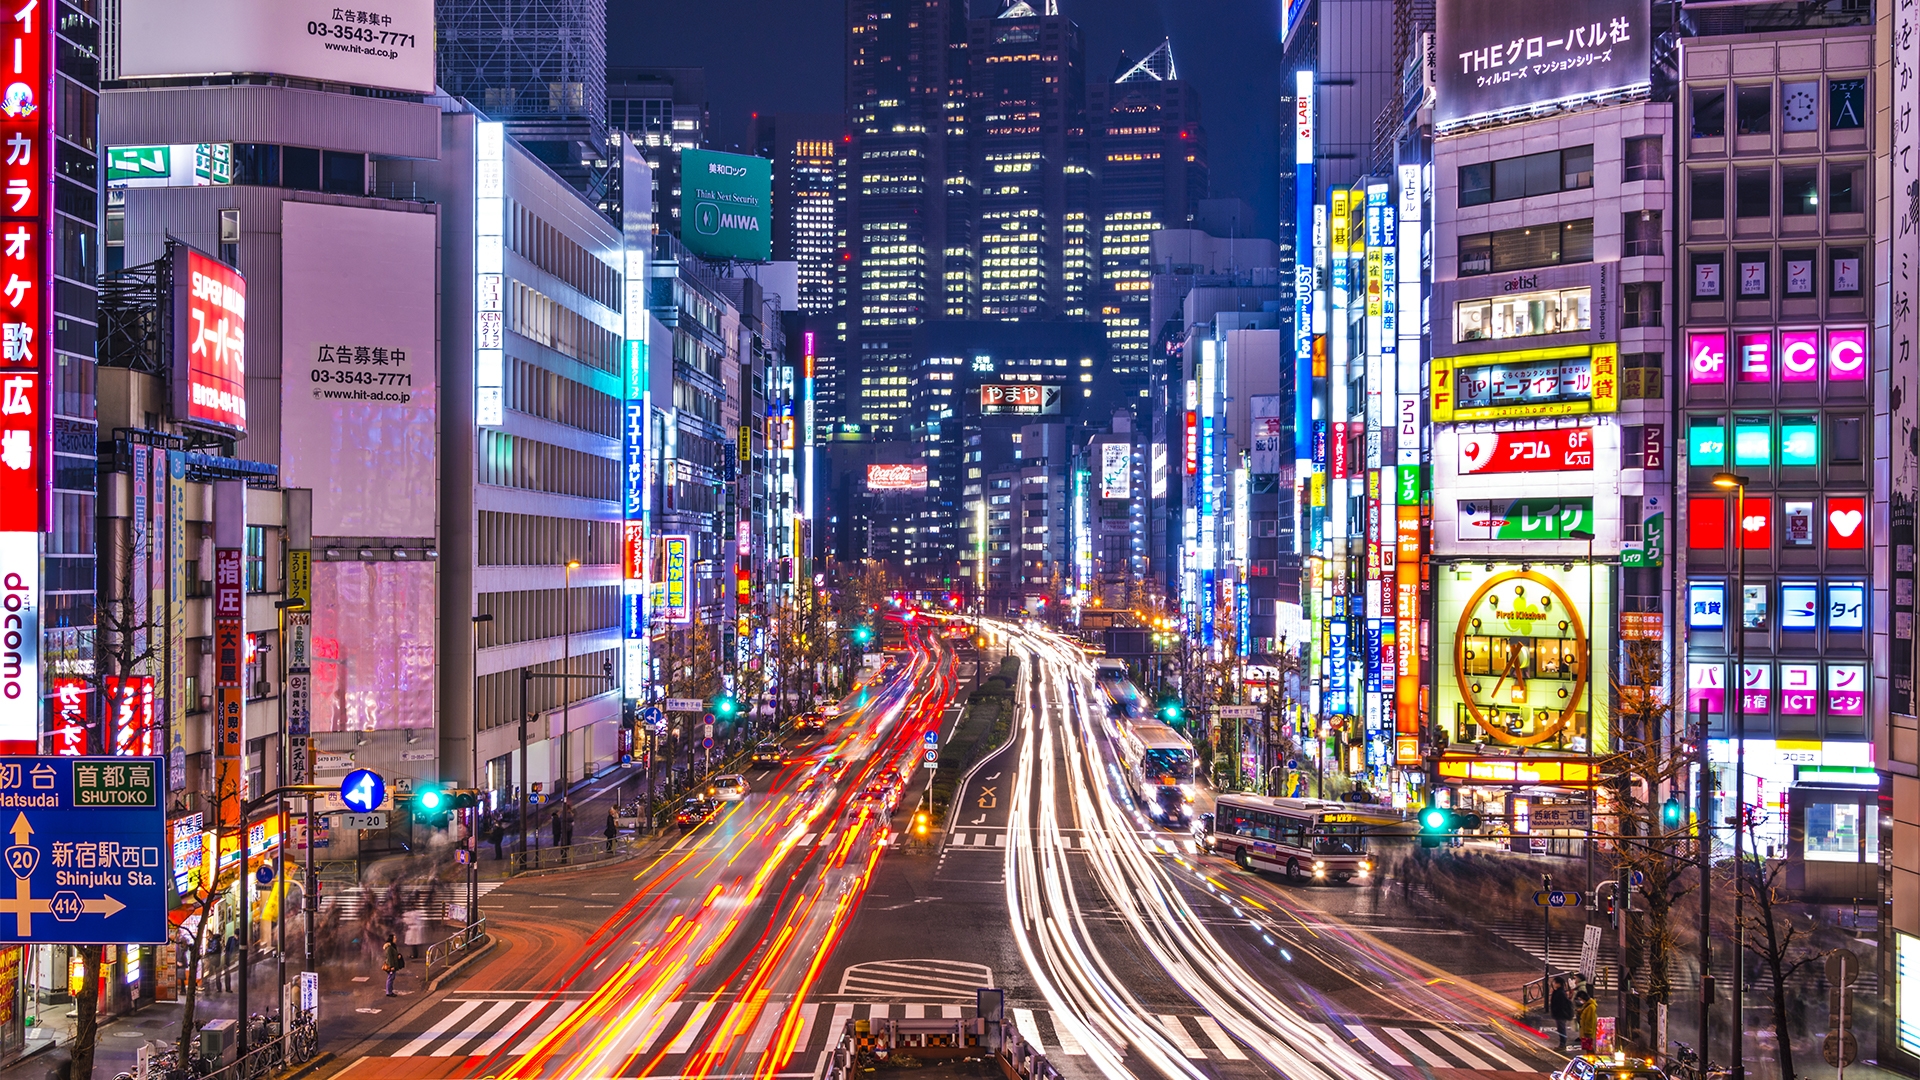 Top 10 Most Romantic Cities in Japan